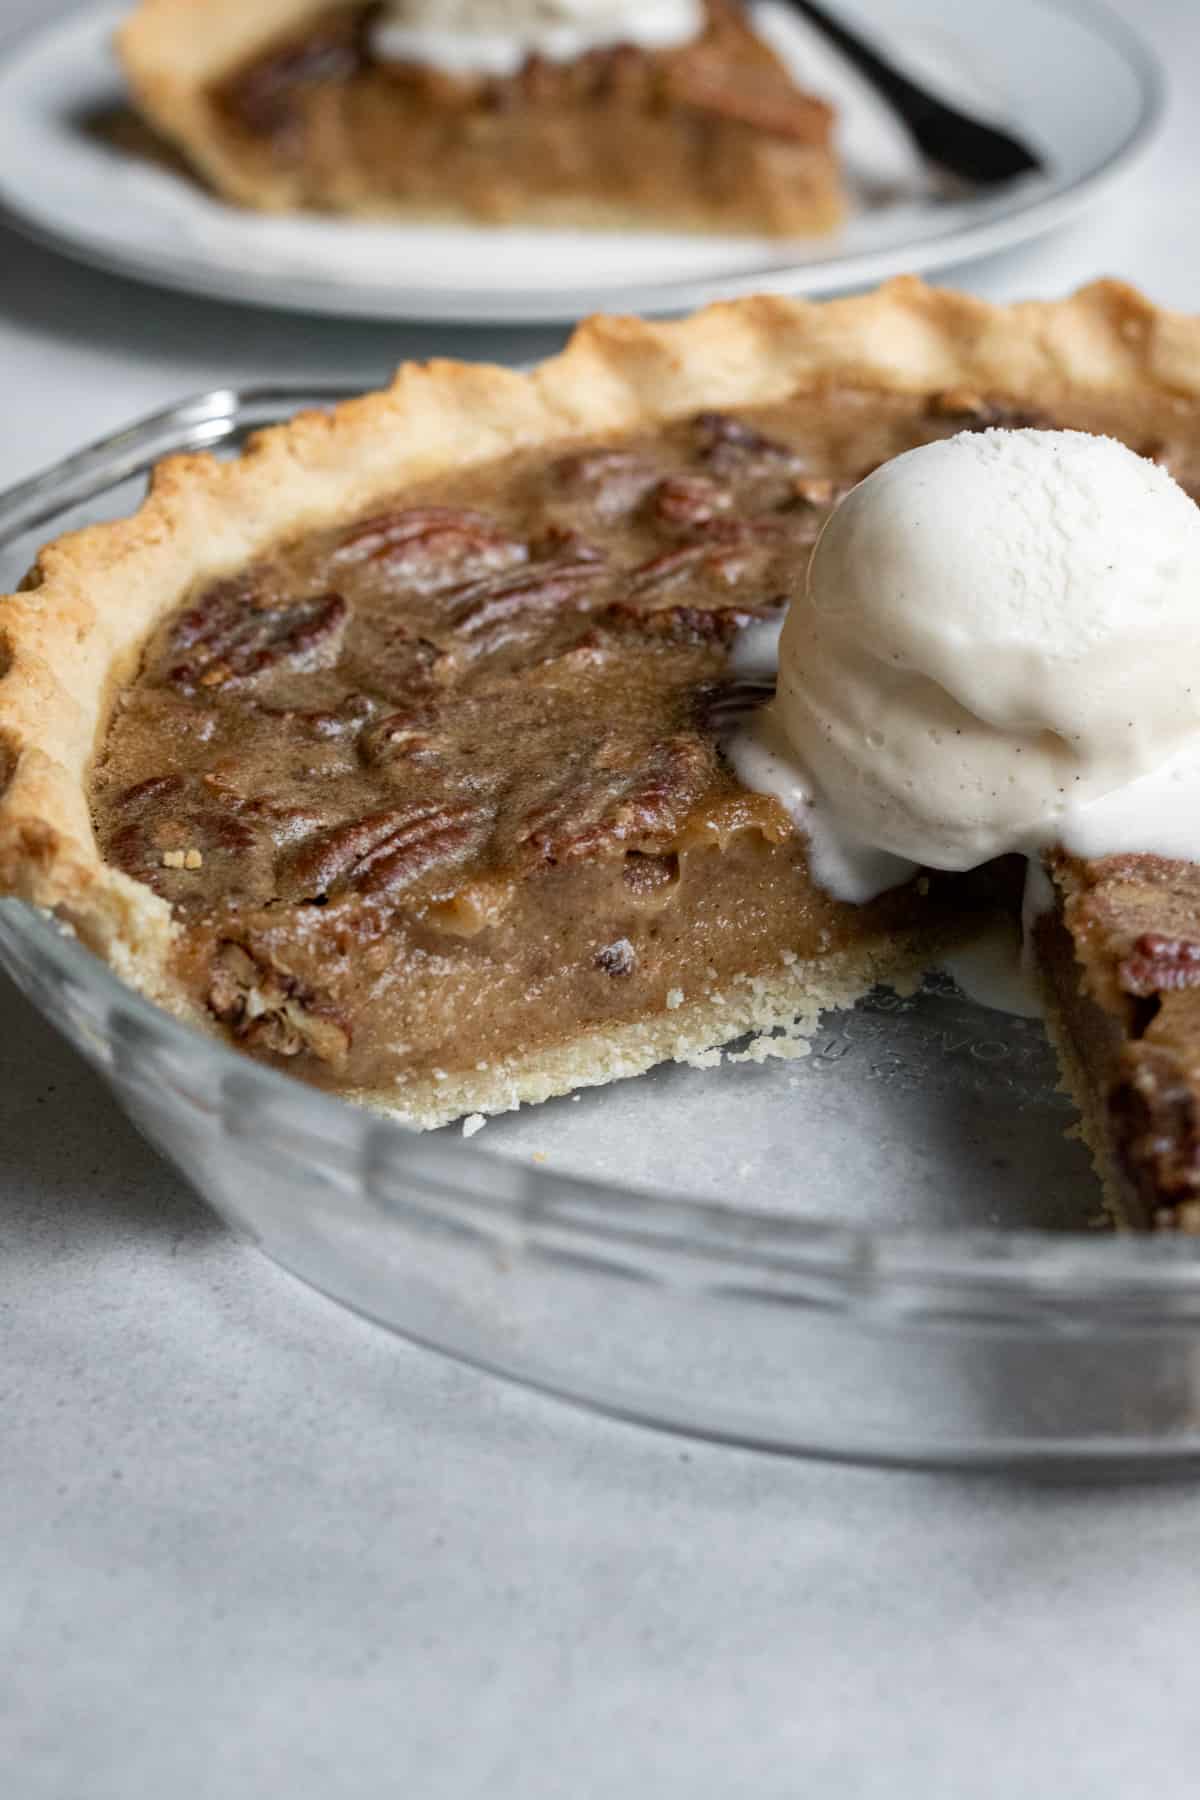 photo of pecan pie showing how edges and underside of the vegan crust look when baked.